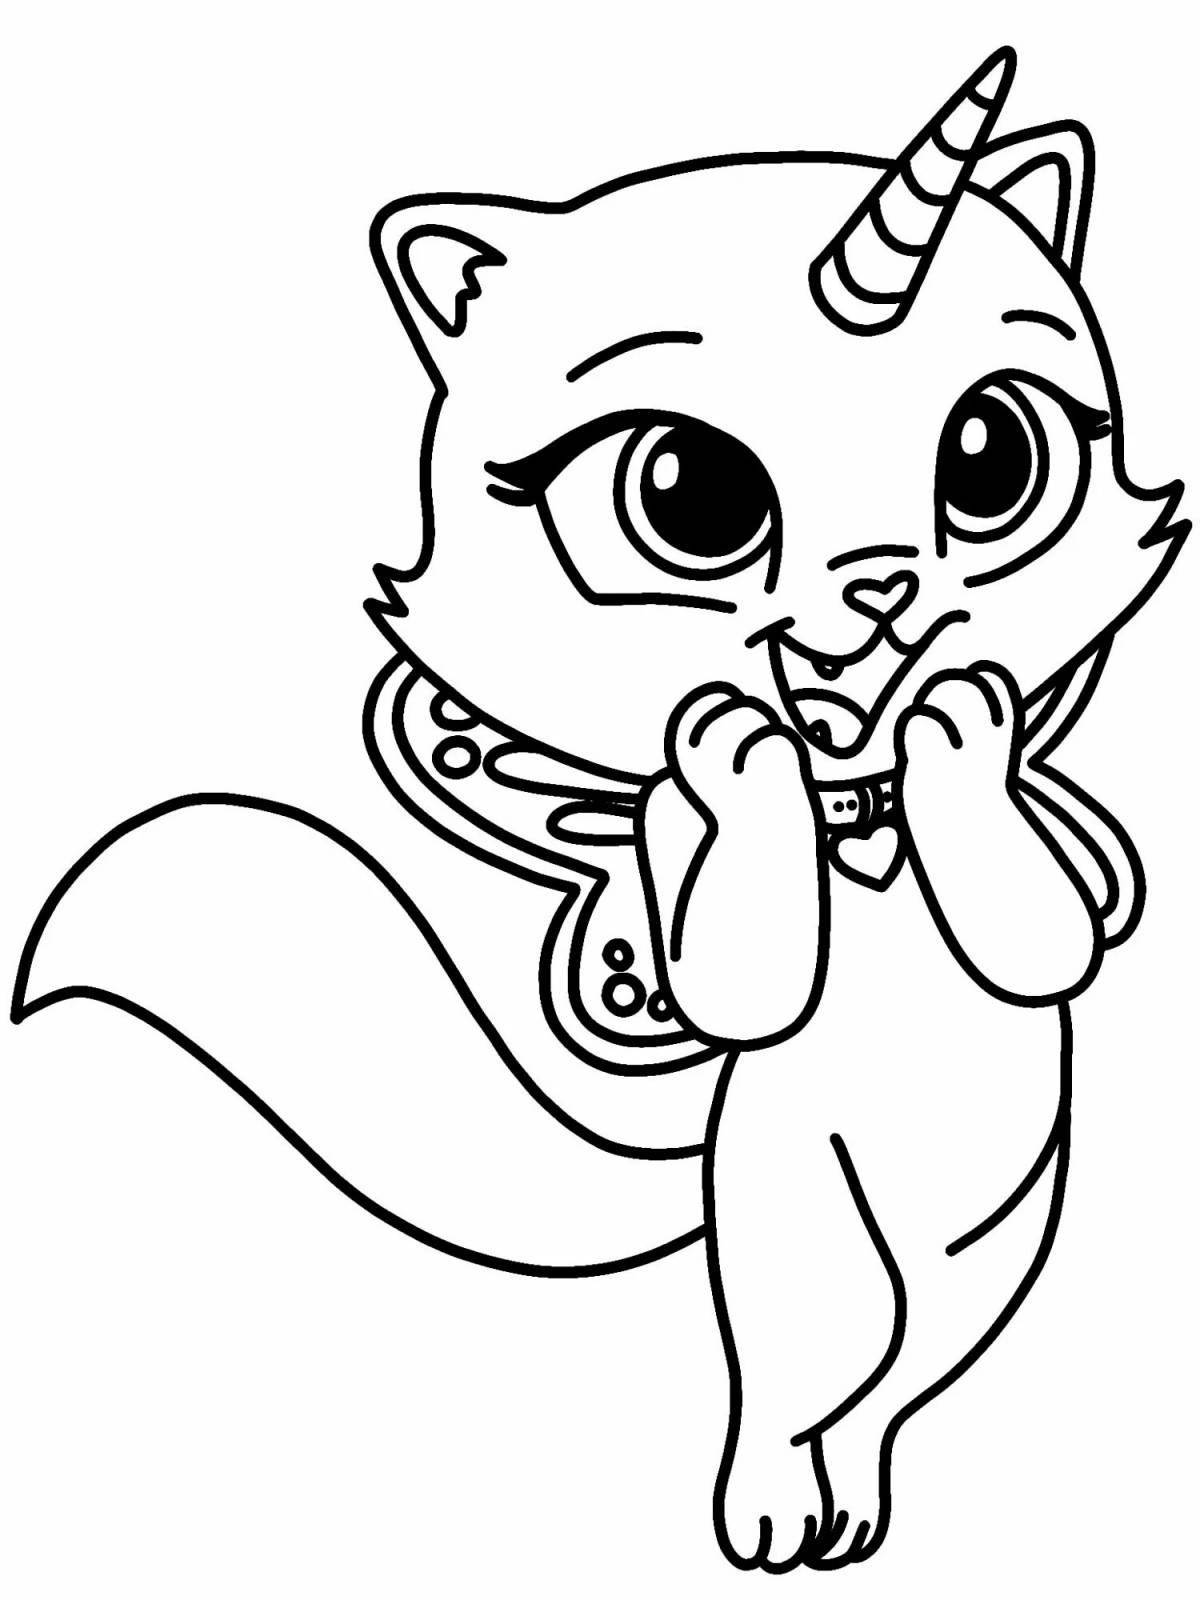 Cheerful kitten coloring merch